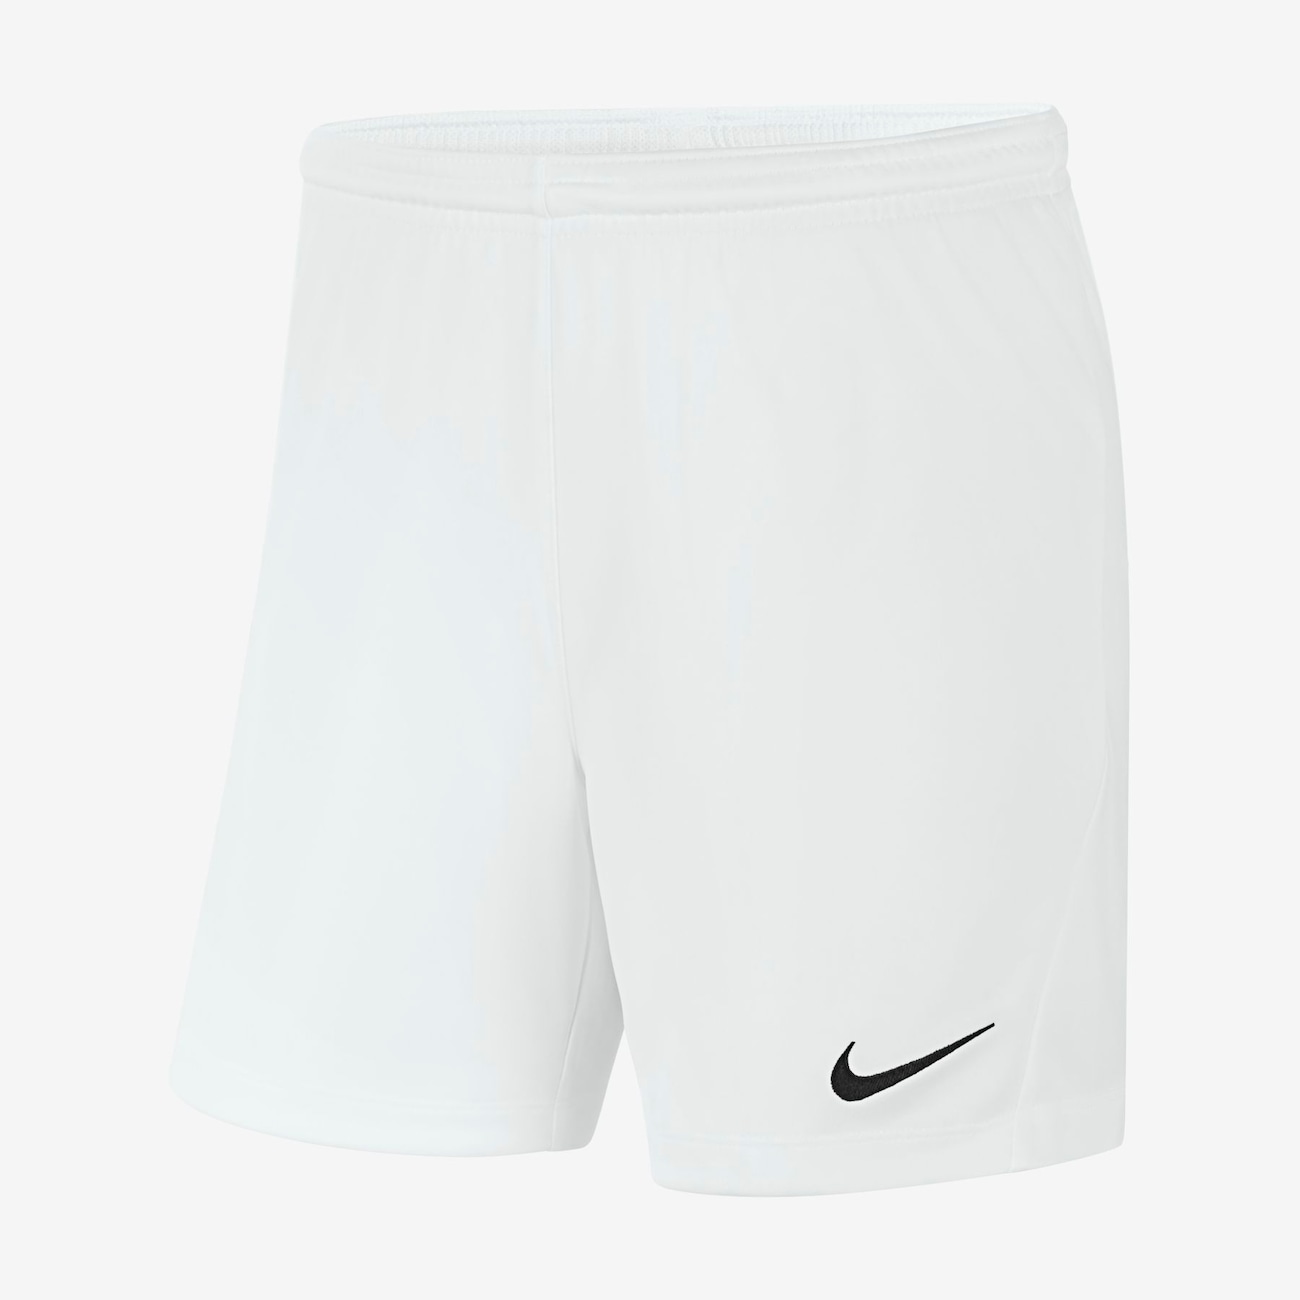 Shorts Nike Dri-FIT Park Feminino